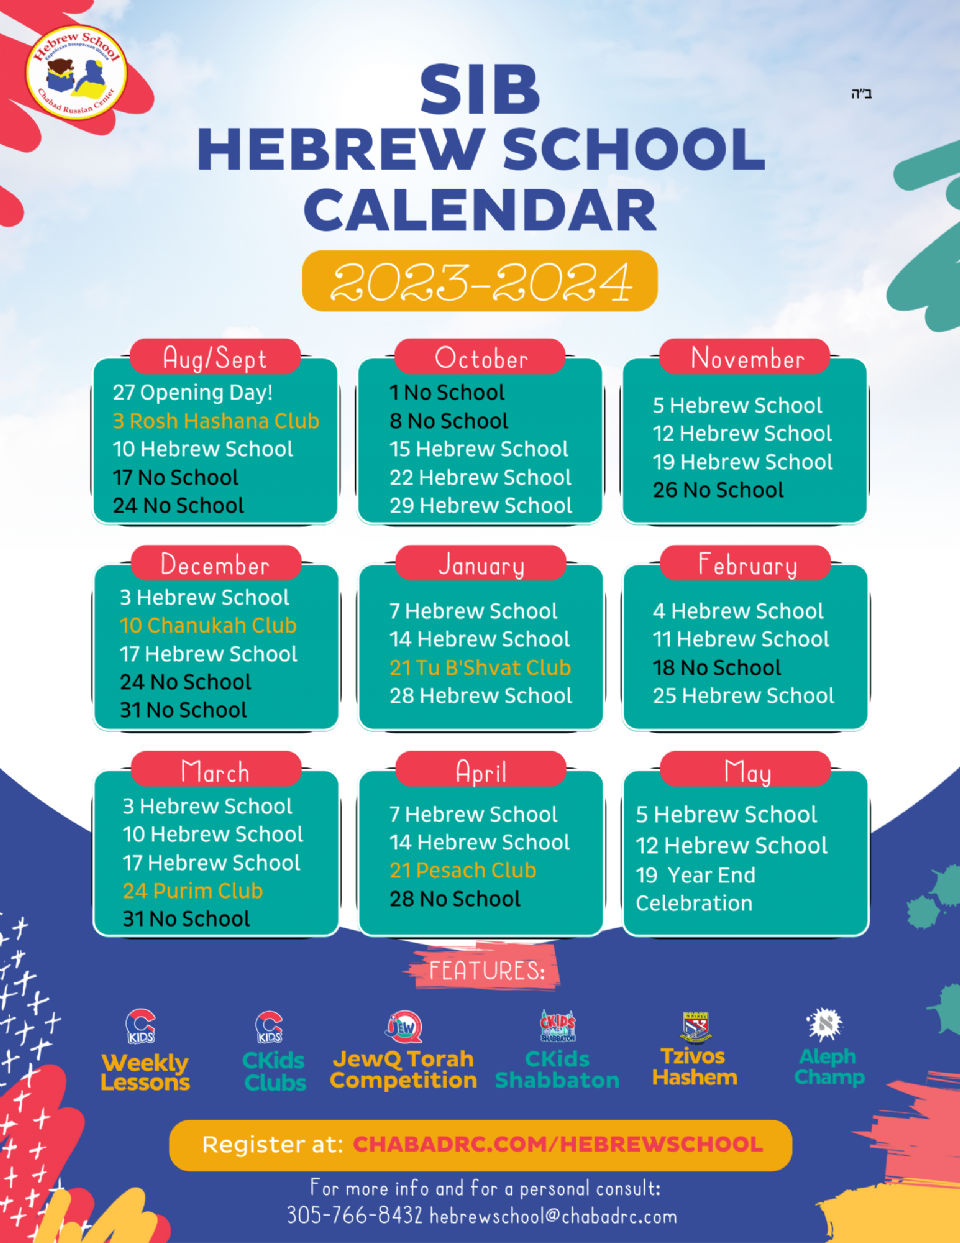 HS Calendar 2020-21 B.jpg